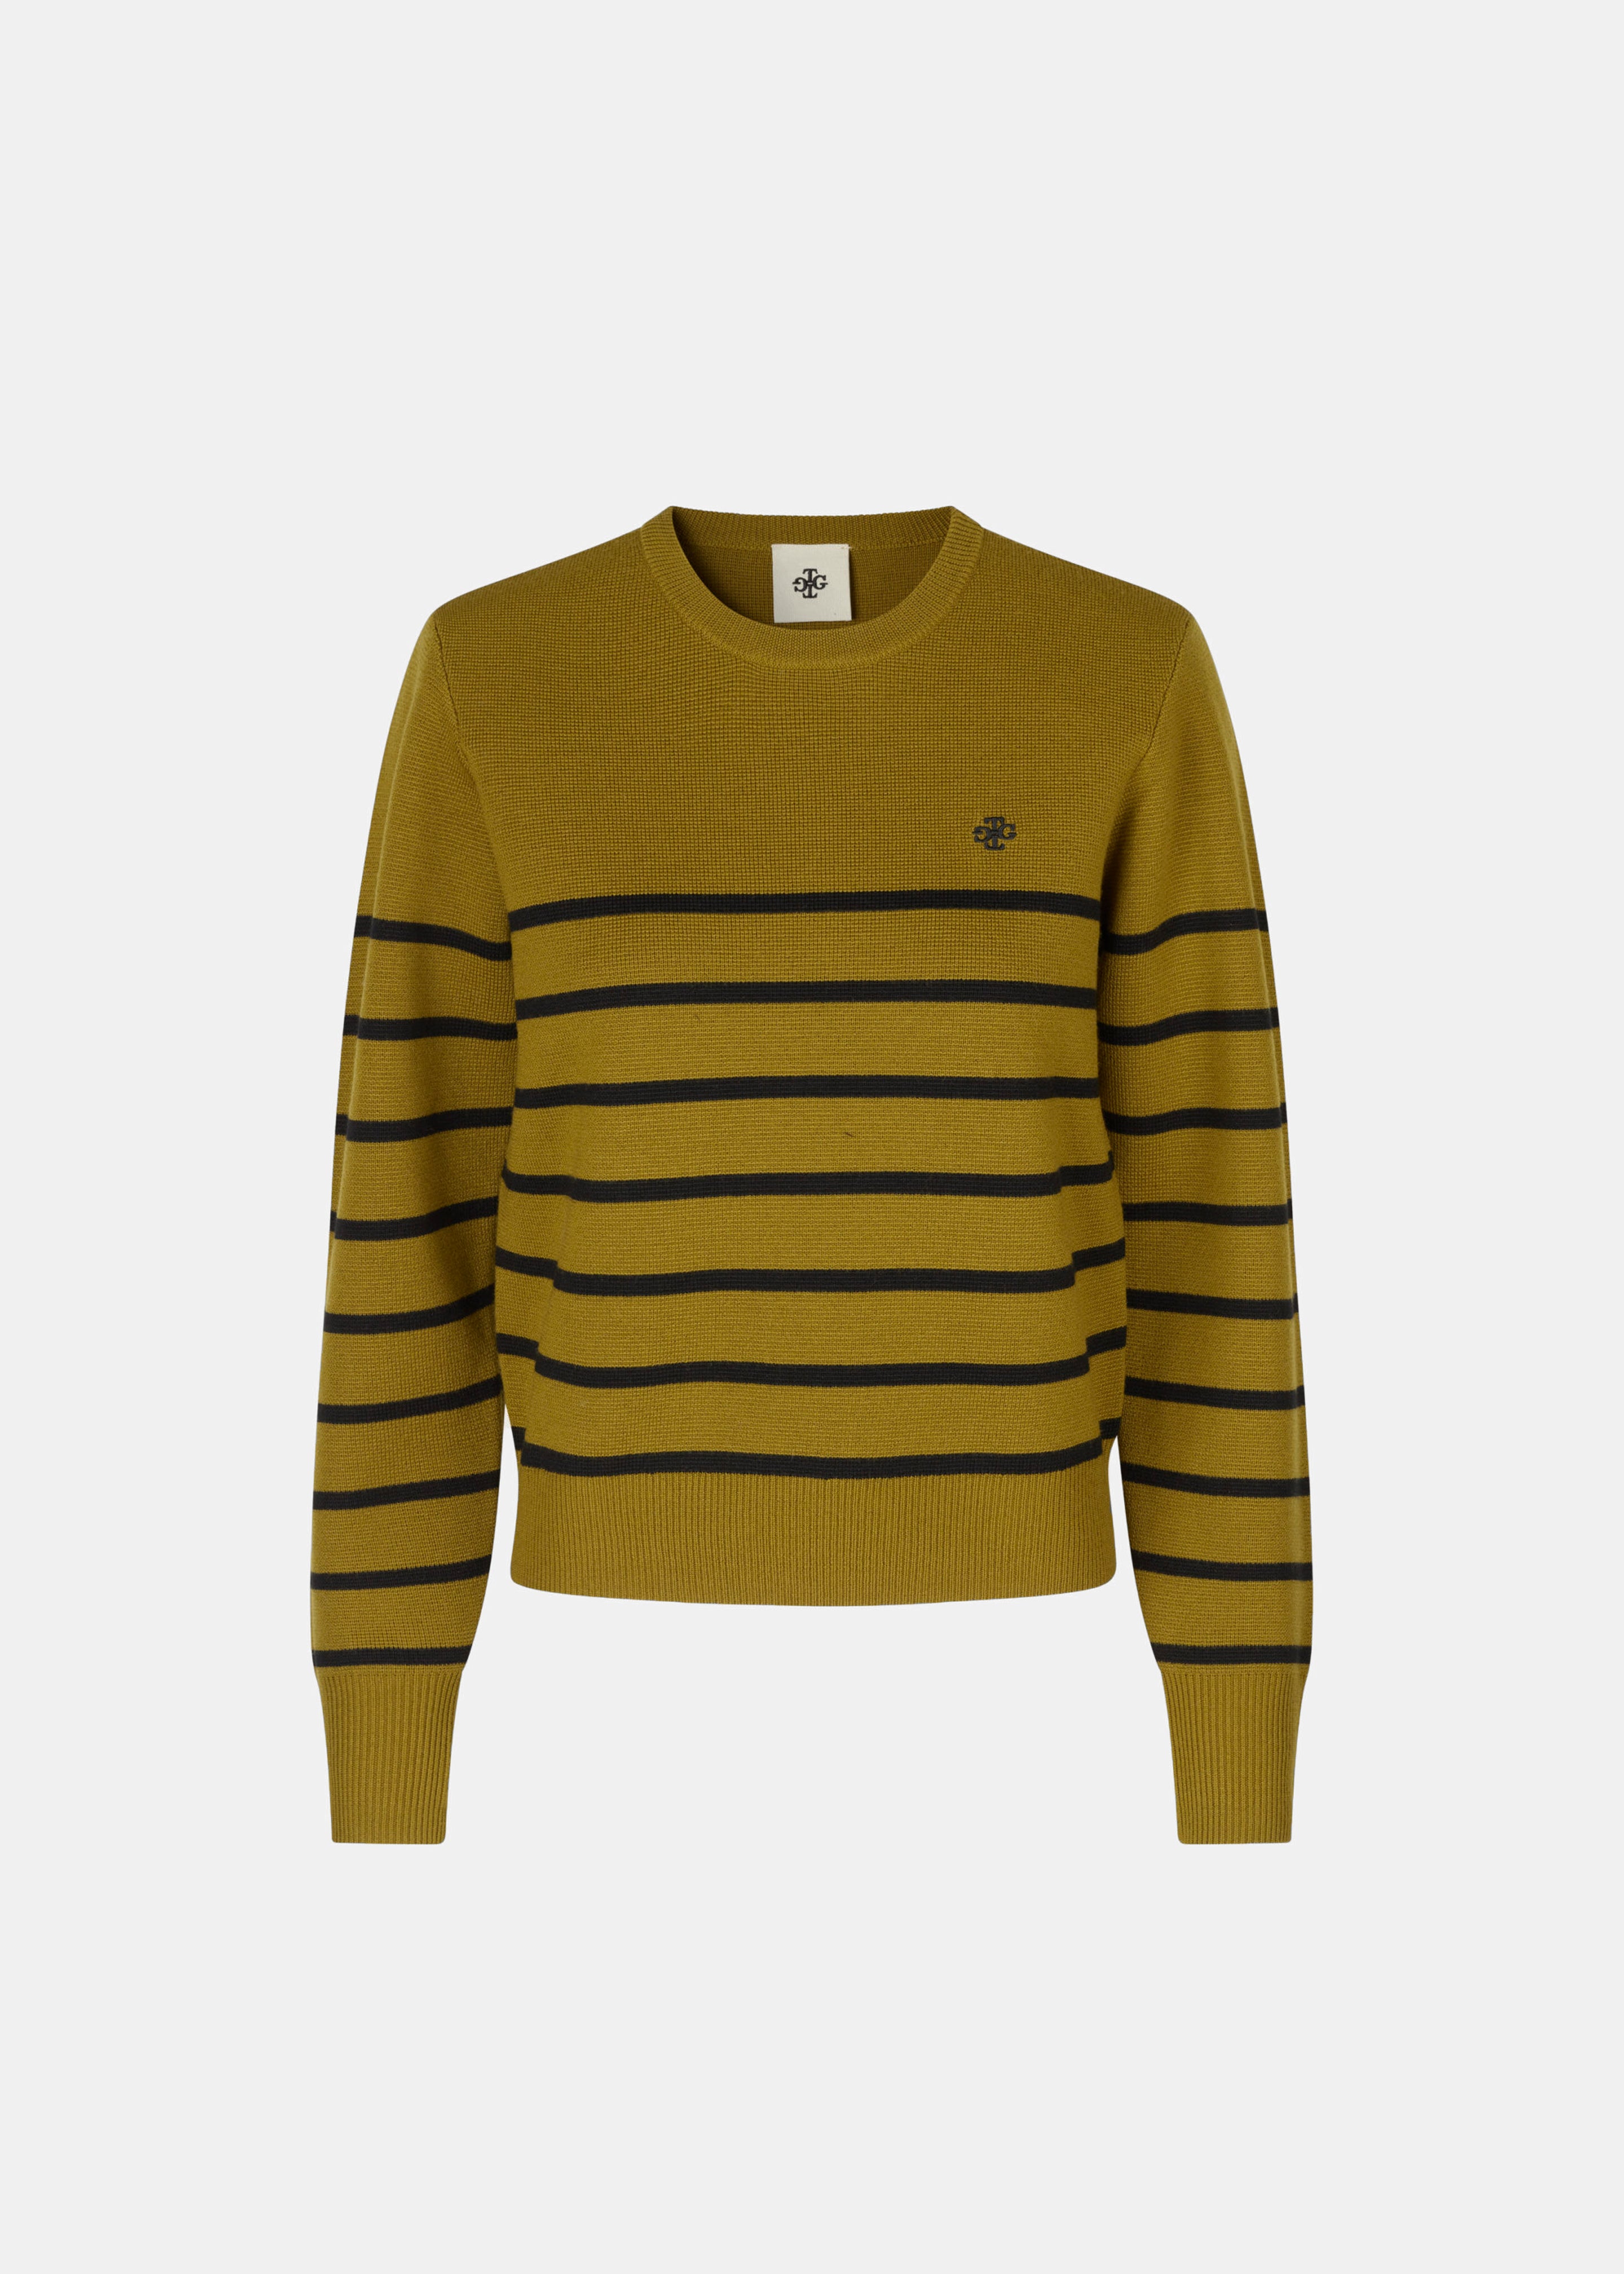 The Garment St Moritz Sweater - Mustard/Black Stripes - 7